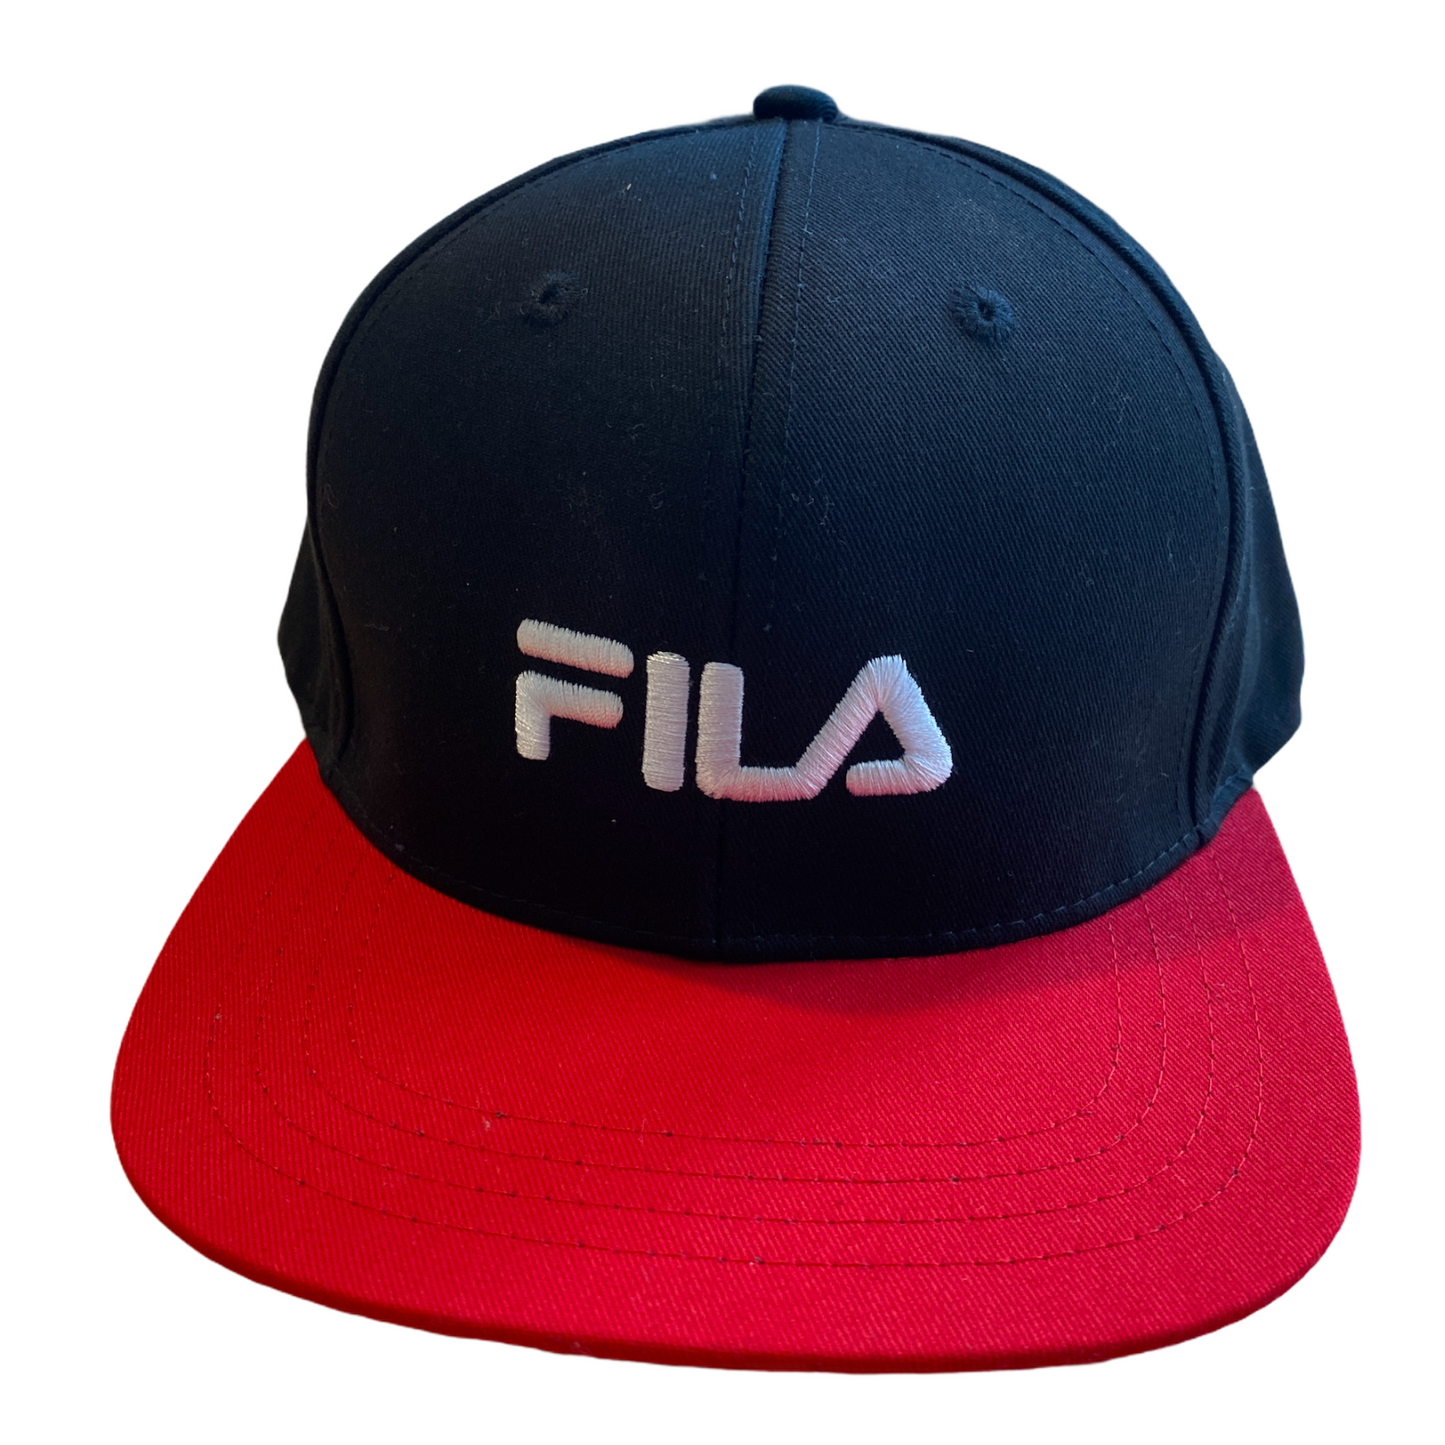 Fila men’s snap back cap black/red